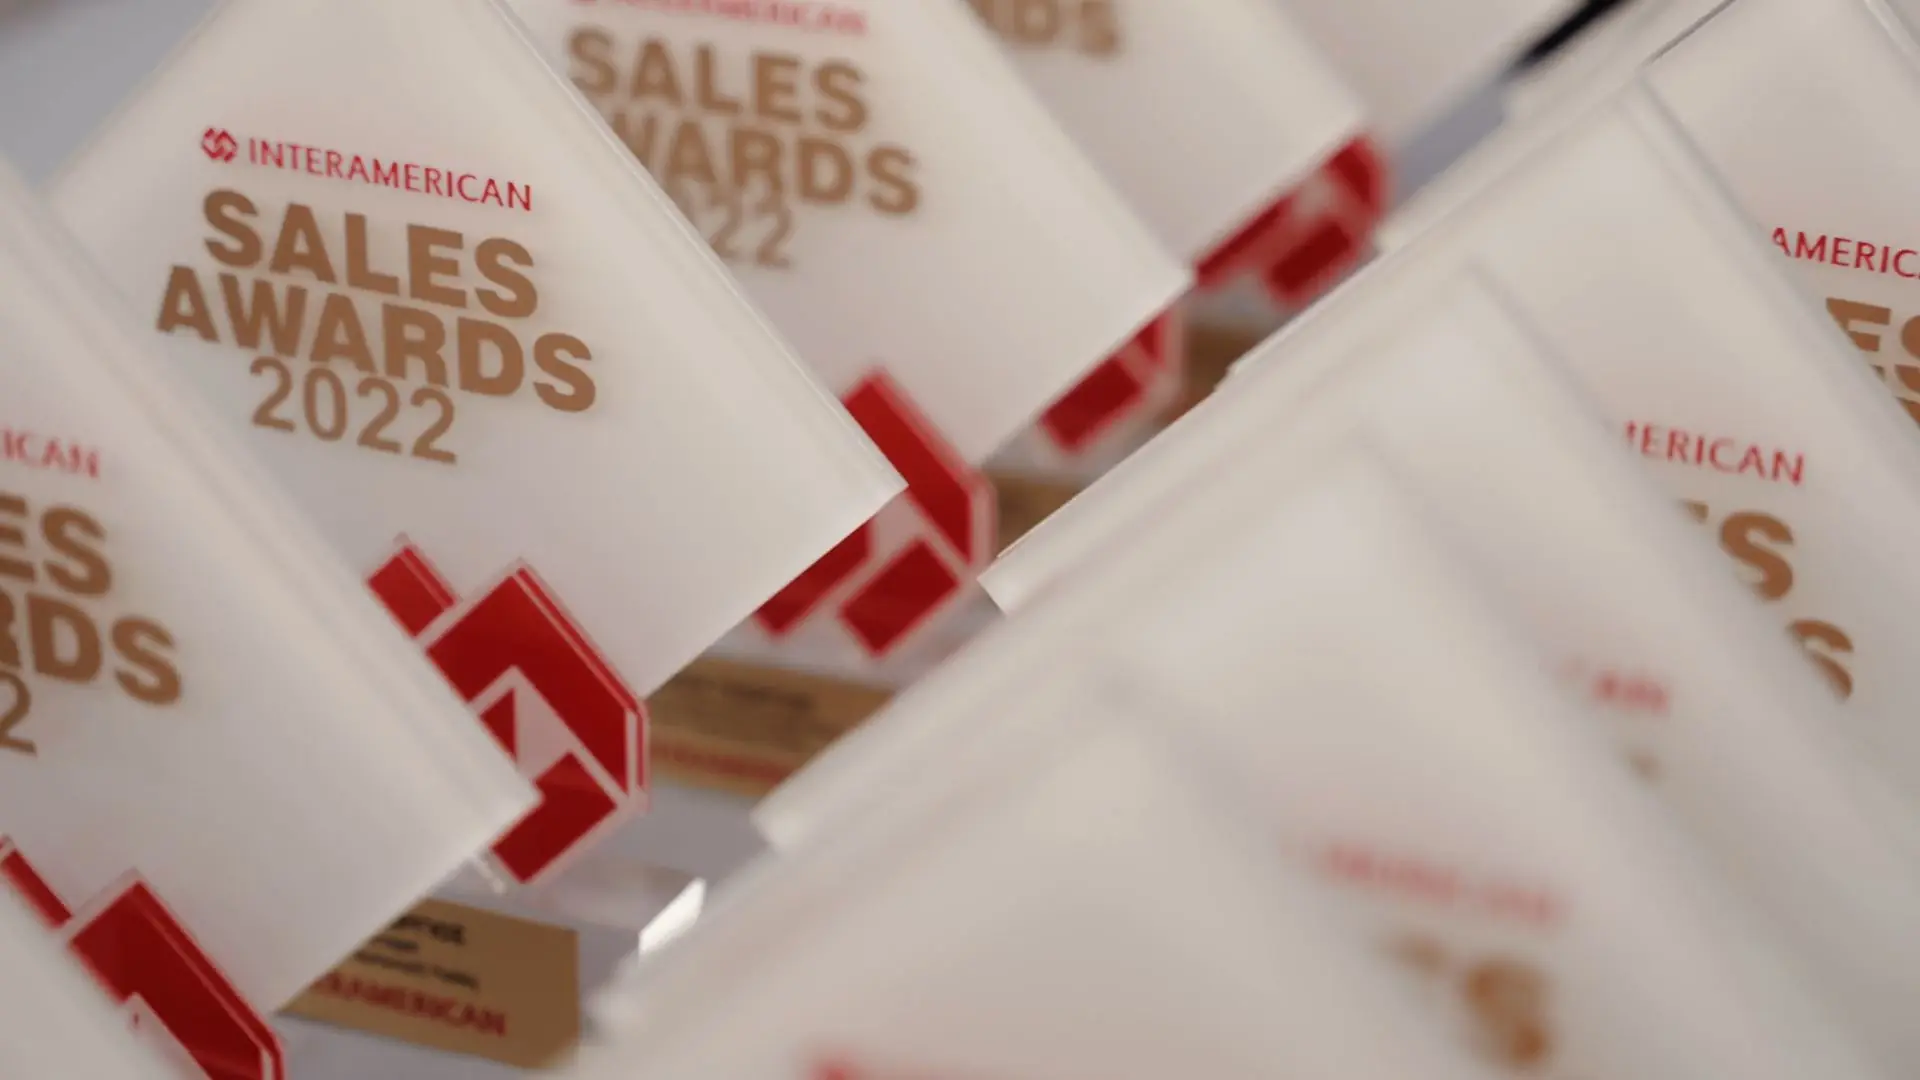 sales awards 2022